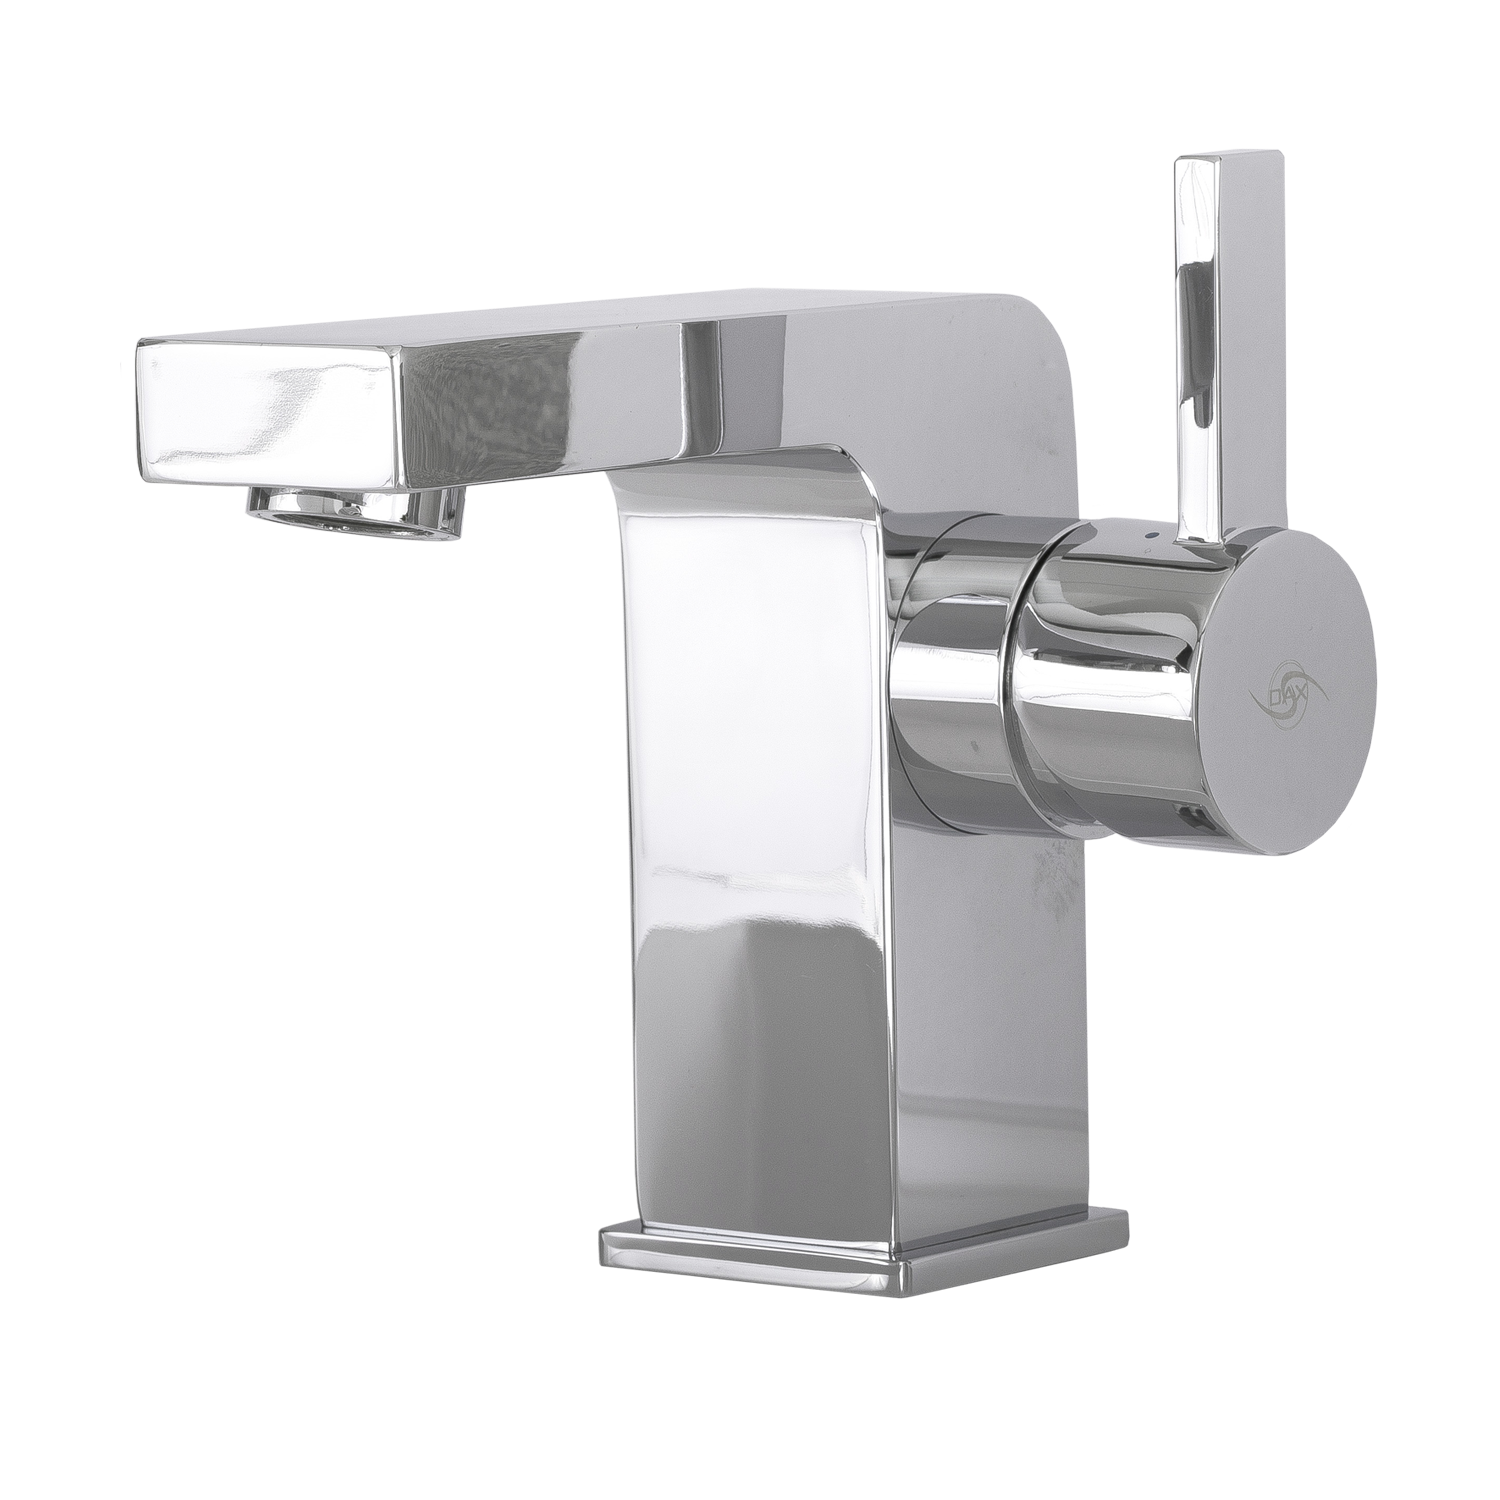 DAX Single Handle Bathroom Faucet, Brass Body, Chrome Finish, 3-15/16 x 4-1/8 Inches (DAX-8227)